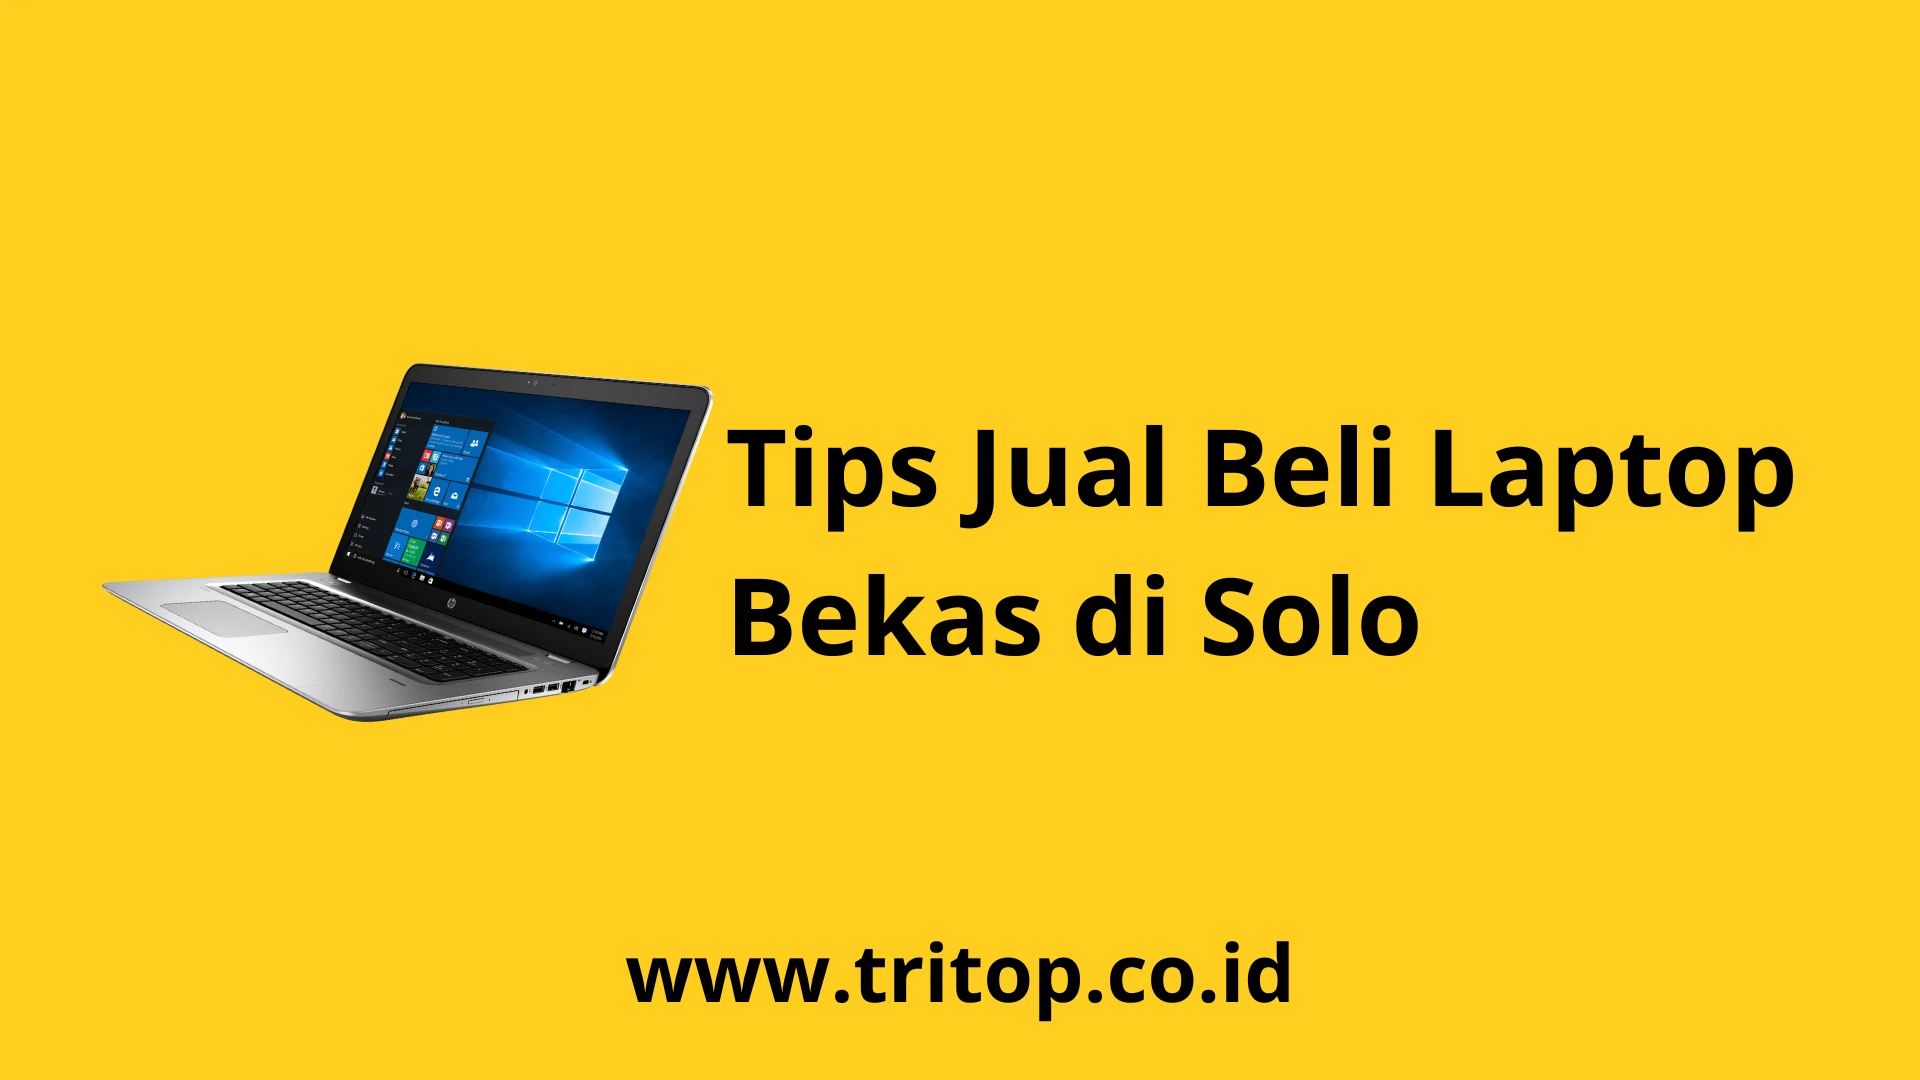 Jual Laptop Bekas Solo Tritop.co.id